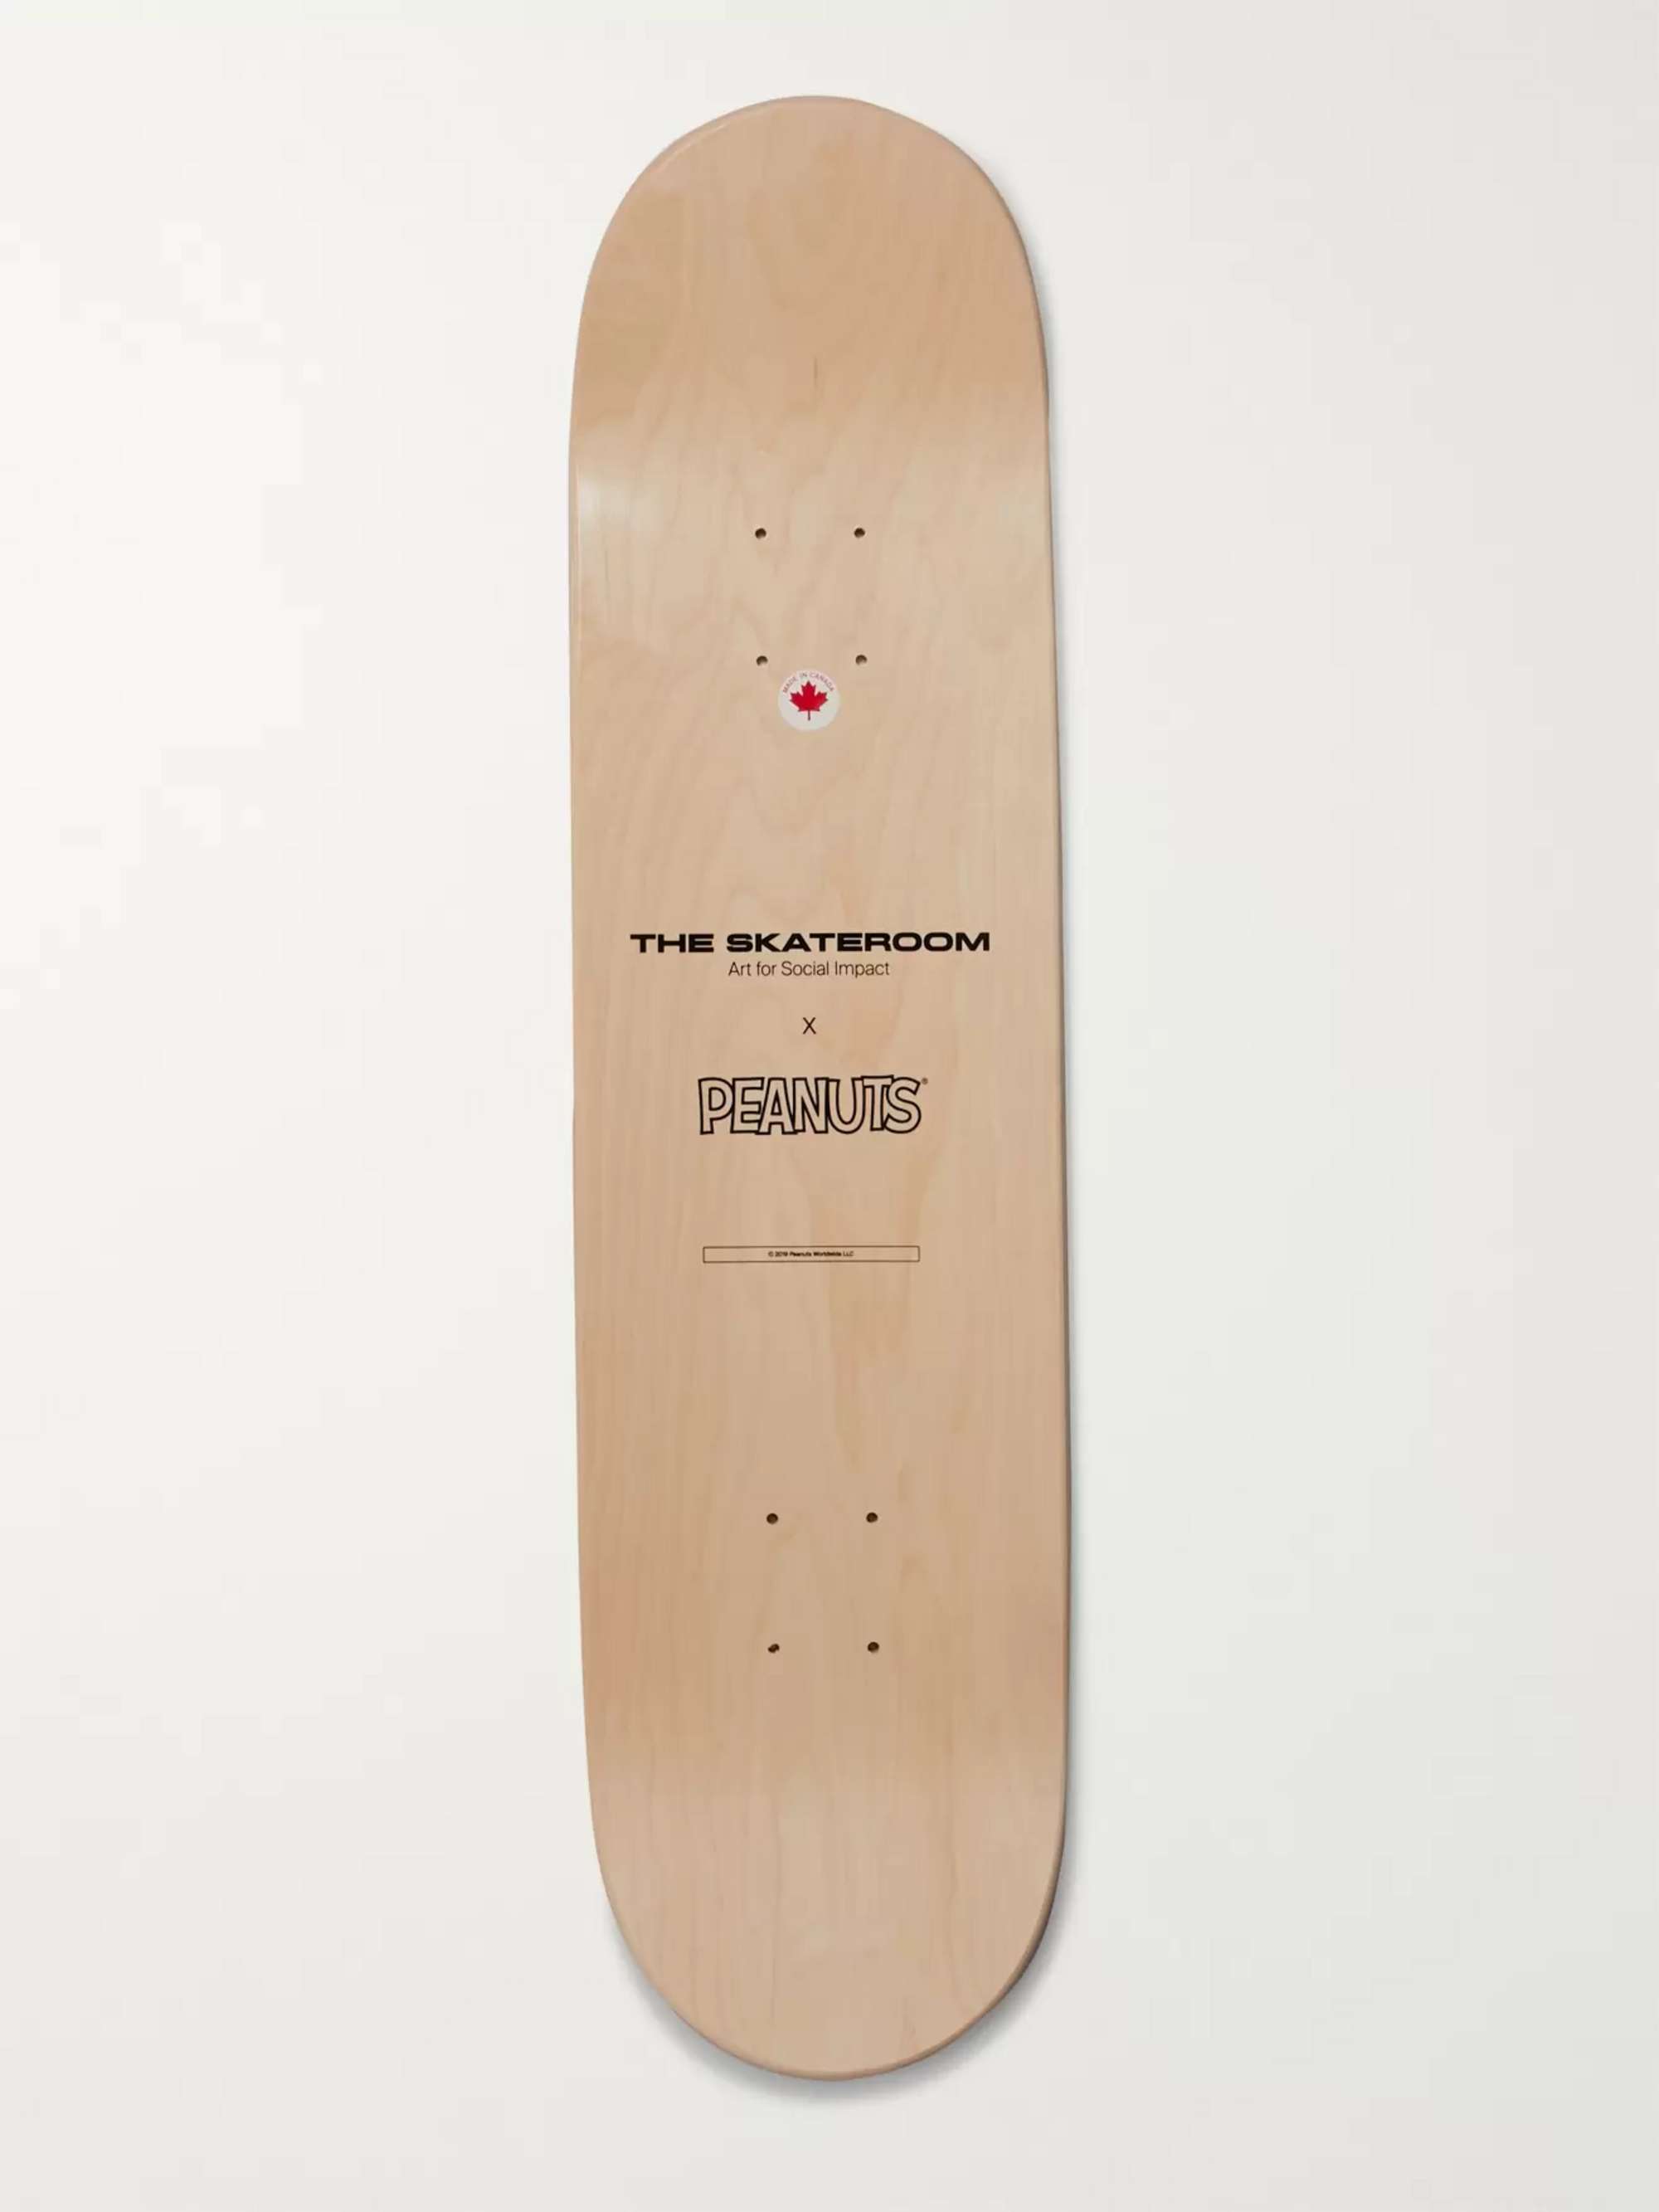 THE SKATEROOM + Peanuts Printed Wooden Skateboard